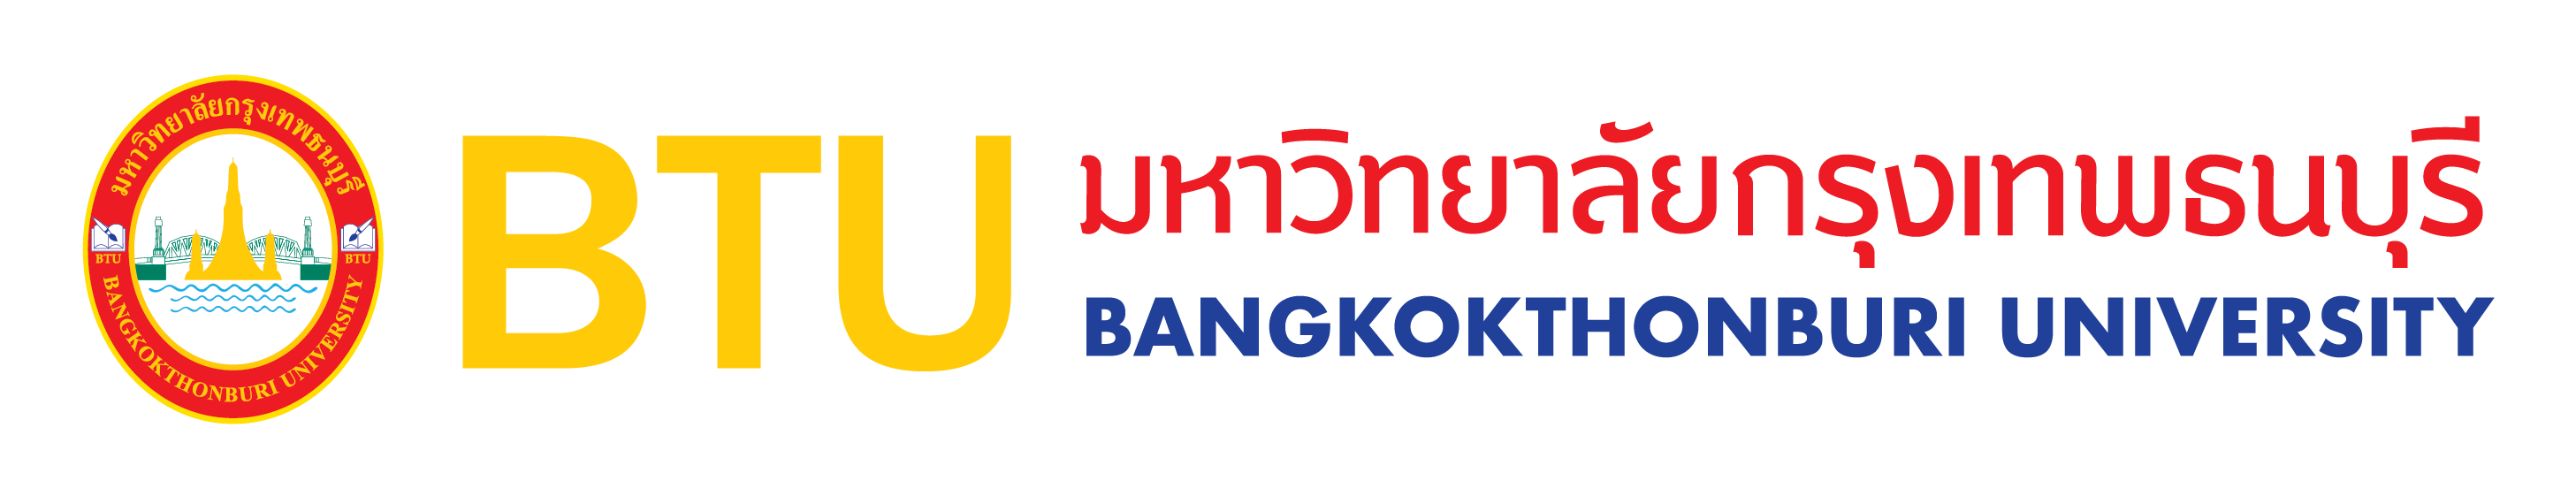 Bangkok Thonburi University